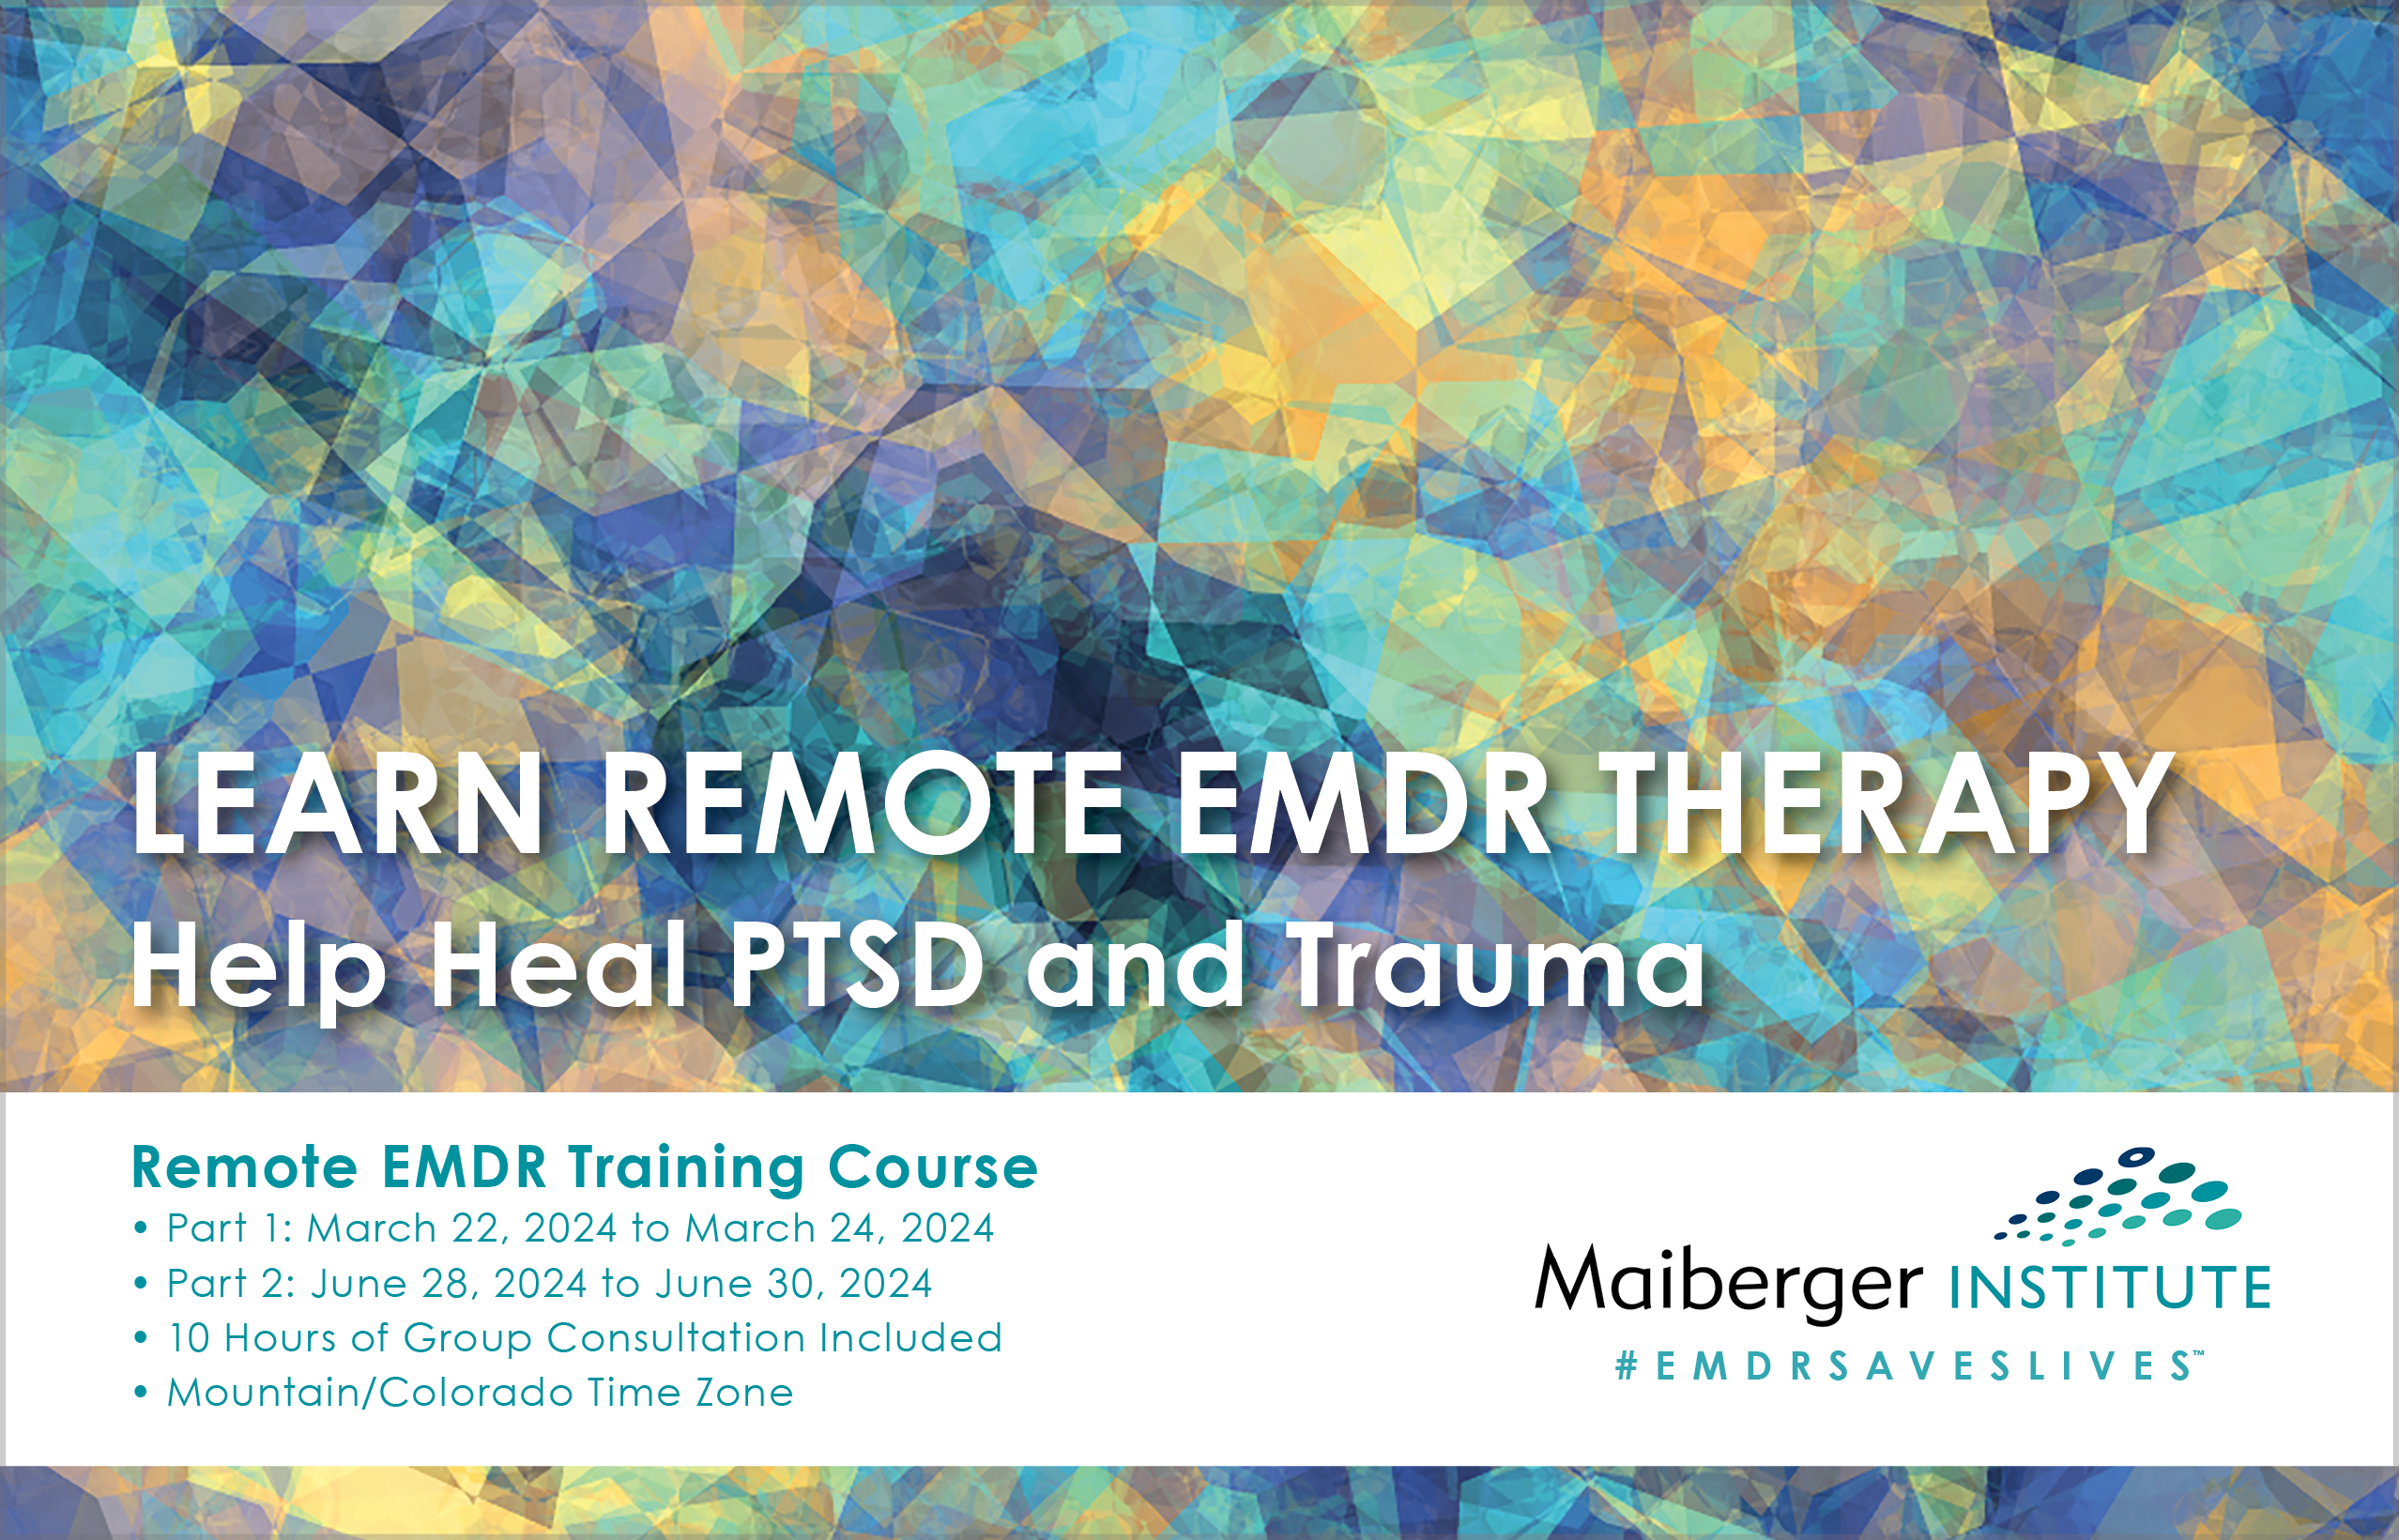 Complete Remote EMDR Training Course - March 2024 and June 2024 - Maiberger Institute - EMDR Event Calendar